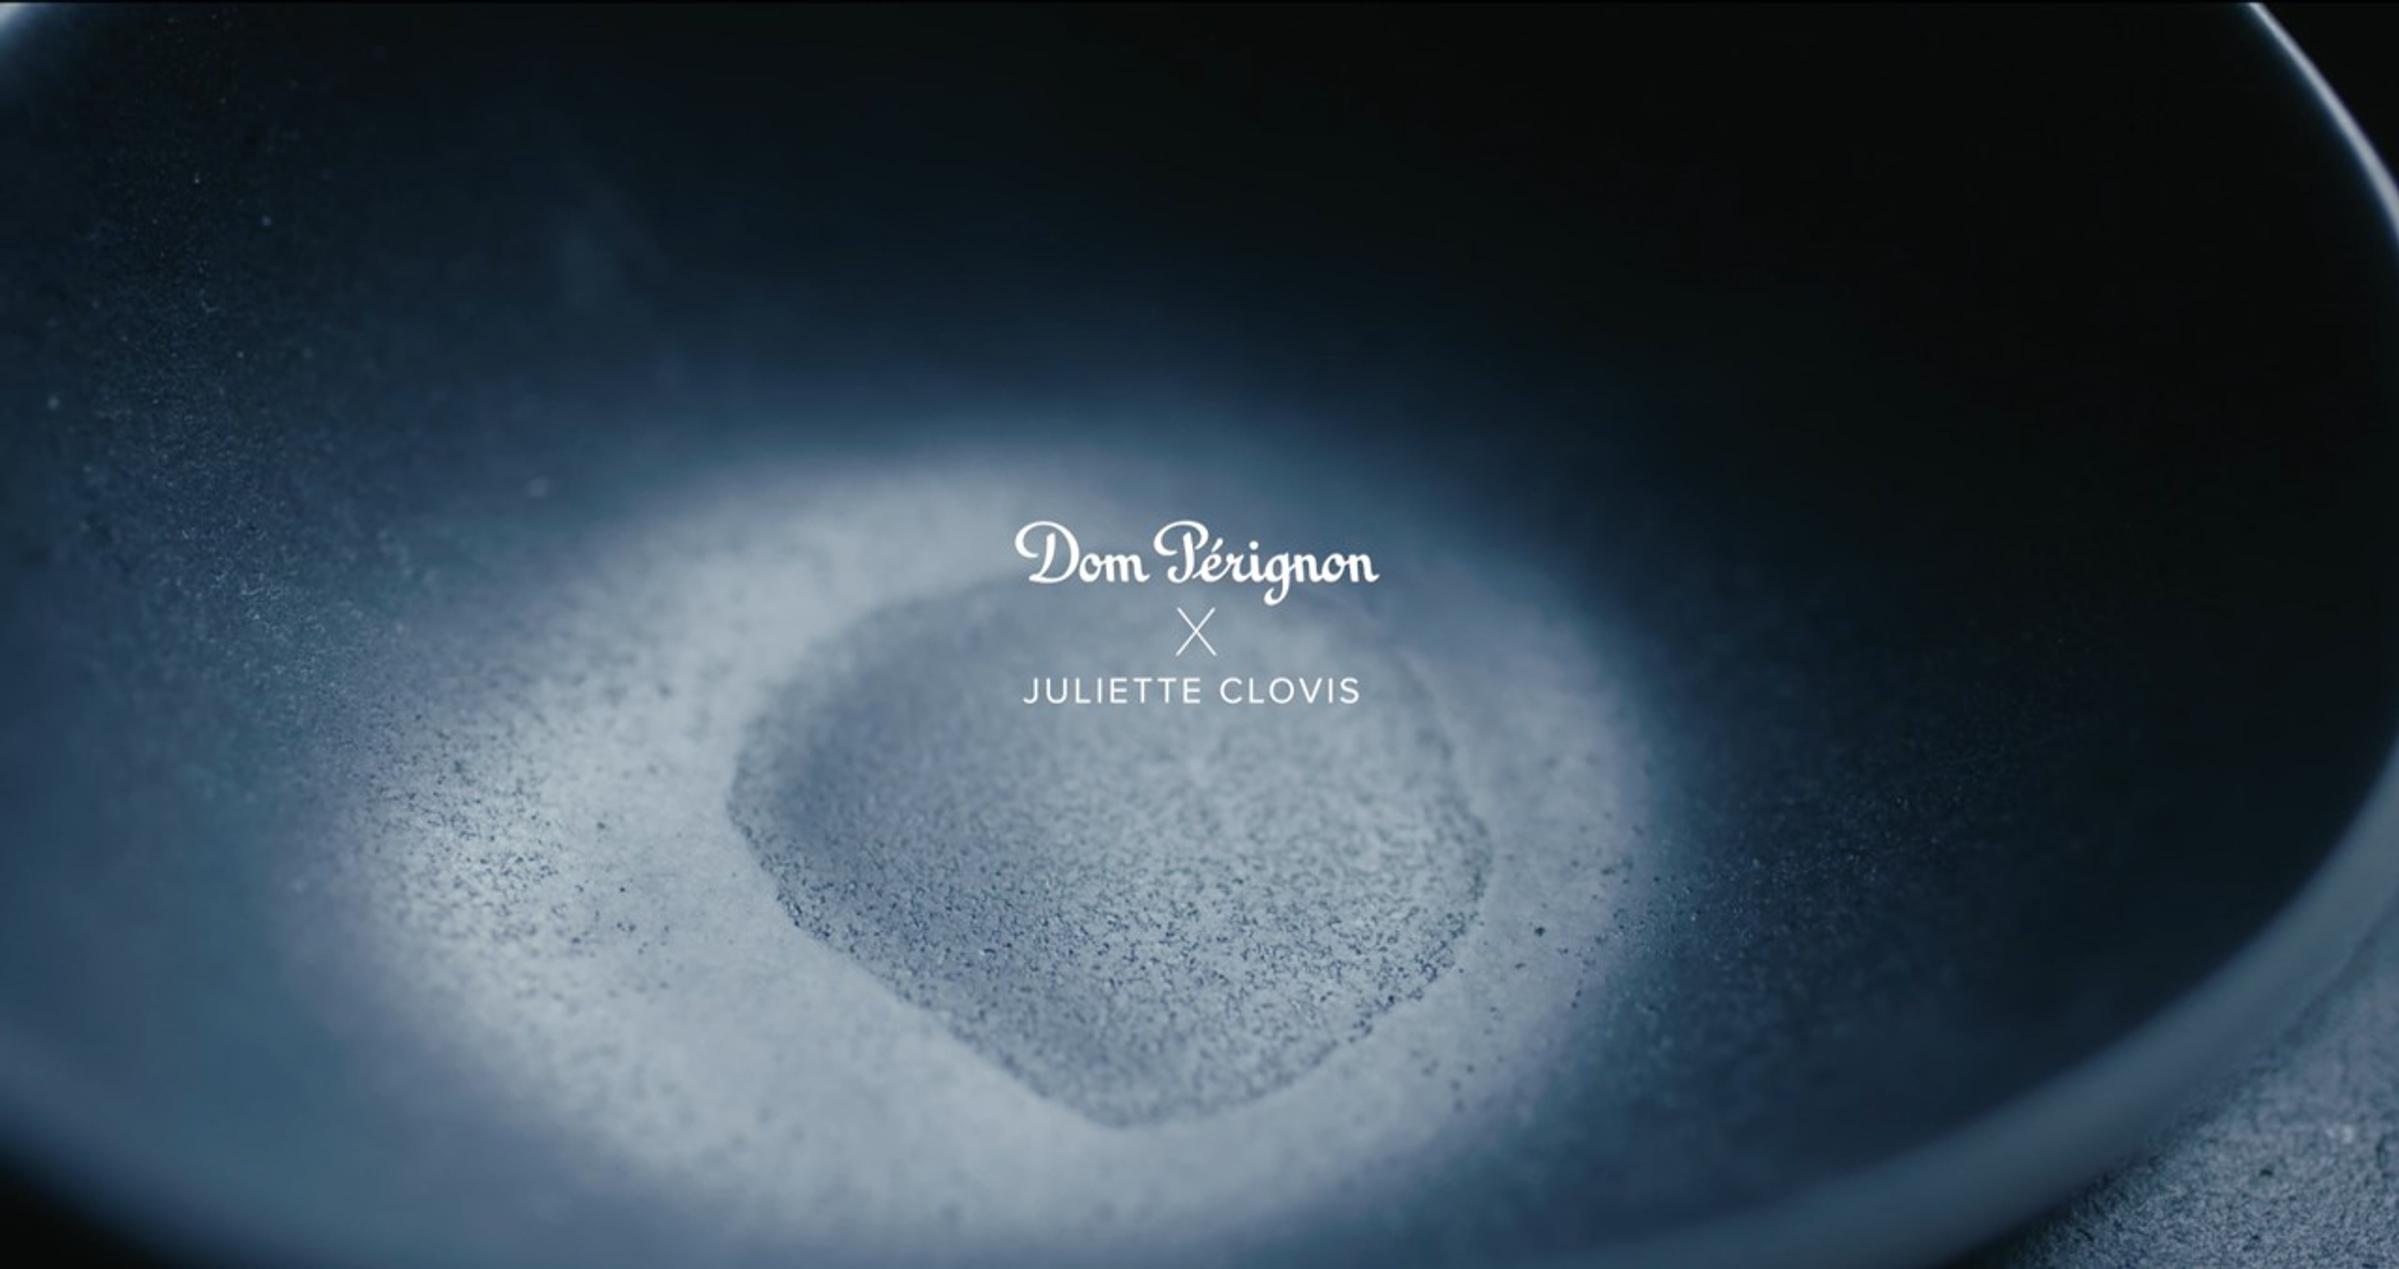 Dom Pérignon - Collaboration